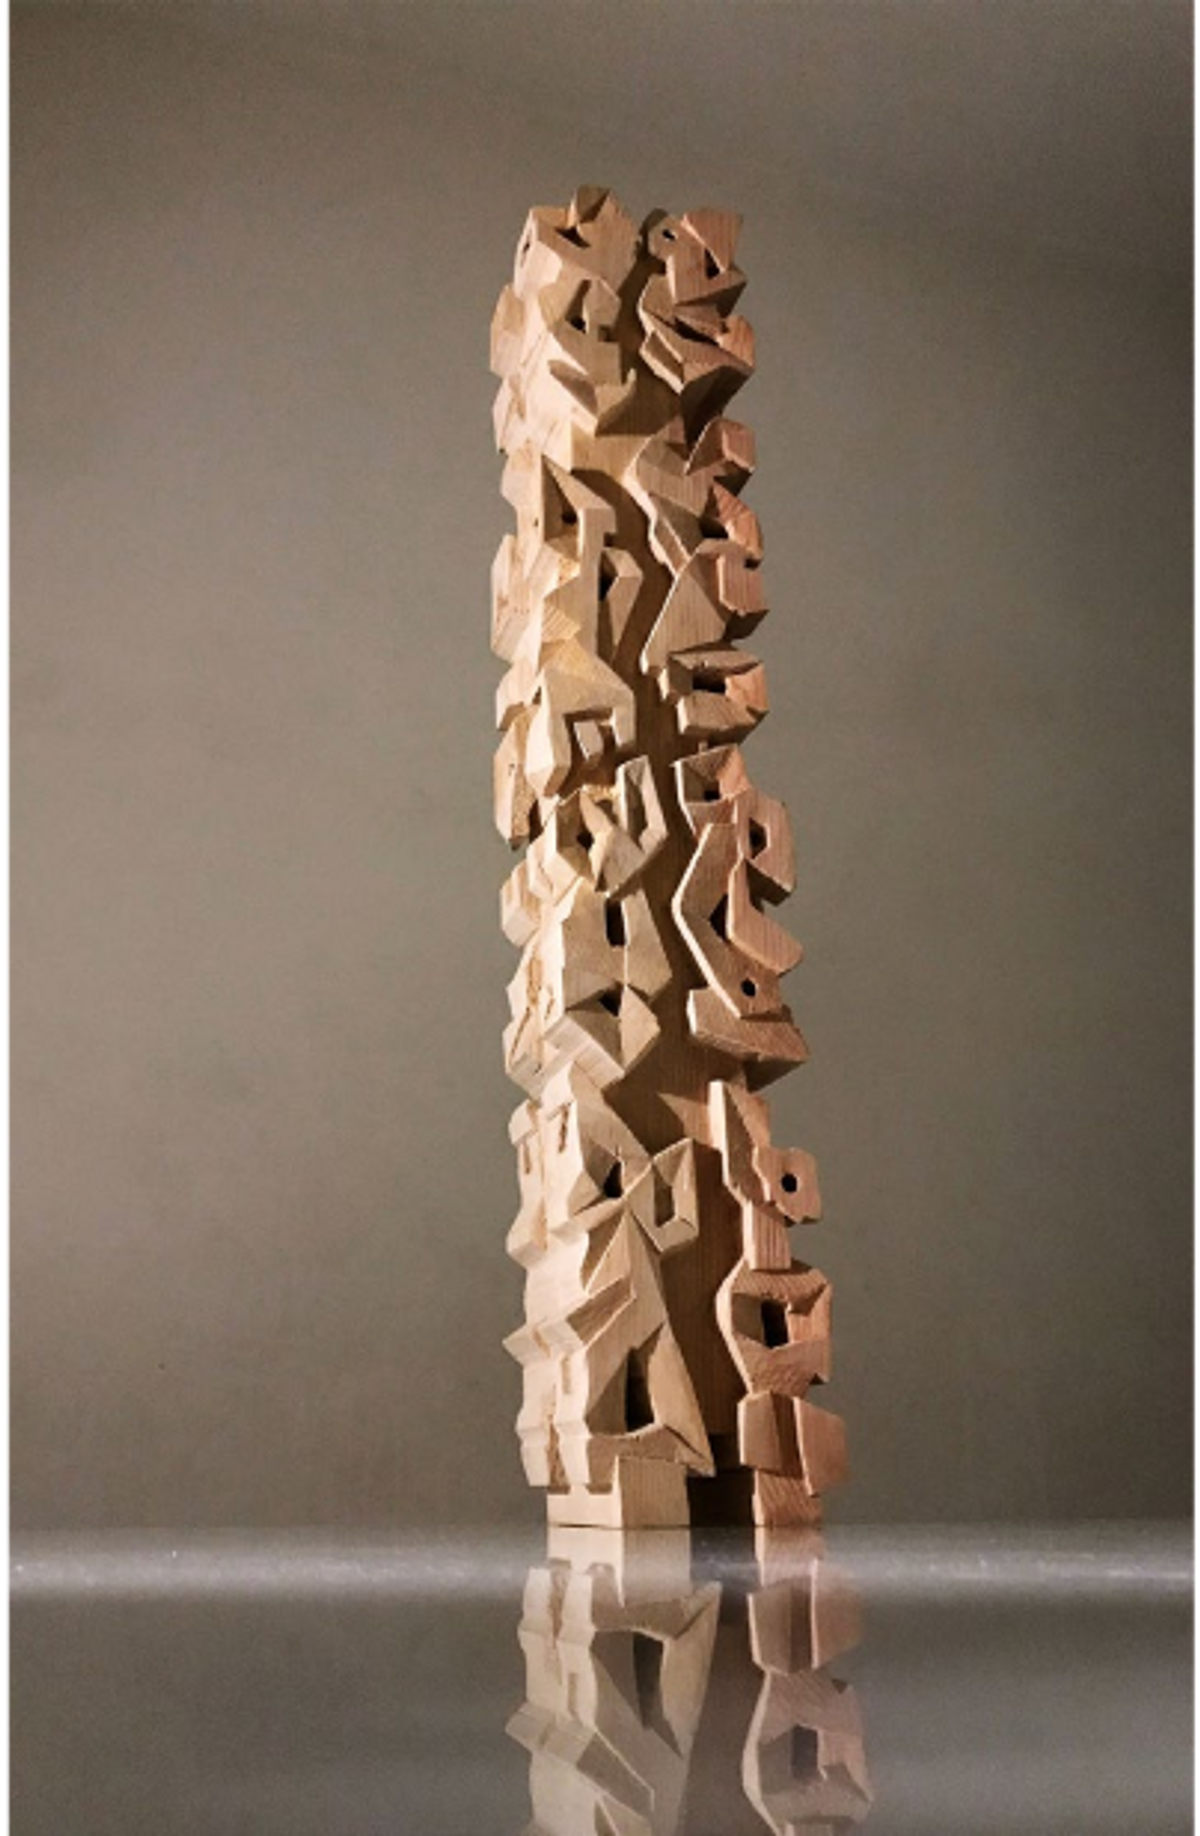 Joseph El Hourany, Untitled, 2010, bois de hêtre. Courtesy de l’artiste et Saleh Barakat Gallery